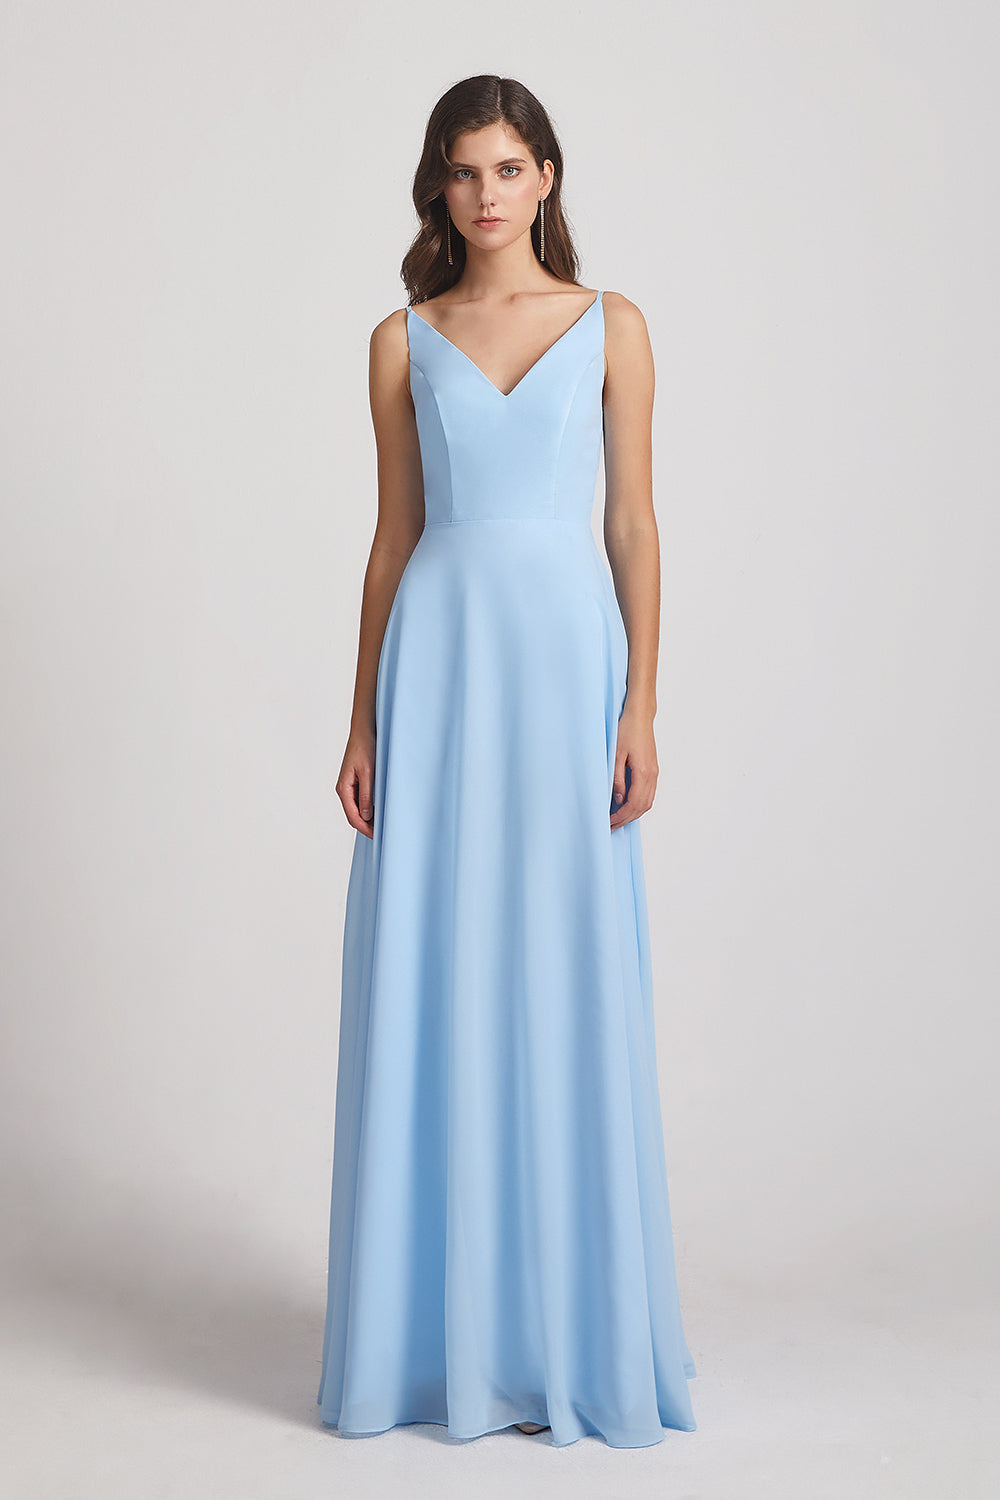 Alfa Bridal Light Sky Blue V-Neck Spaghetti Straps Chiffon Bridesmaid Dresses With Back Tie (AF0002)